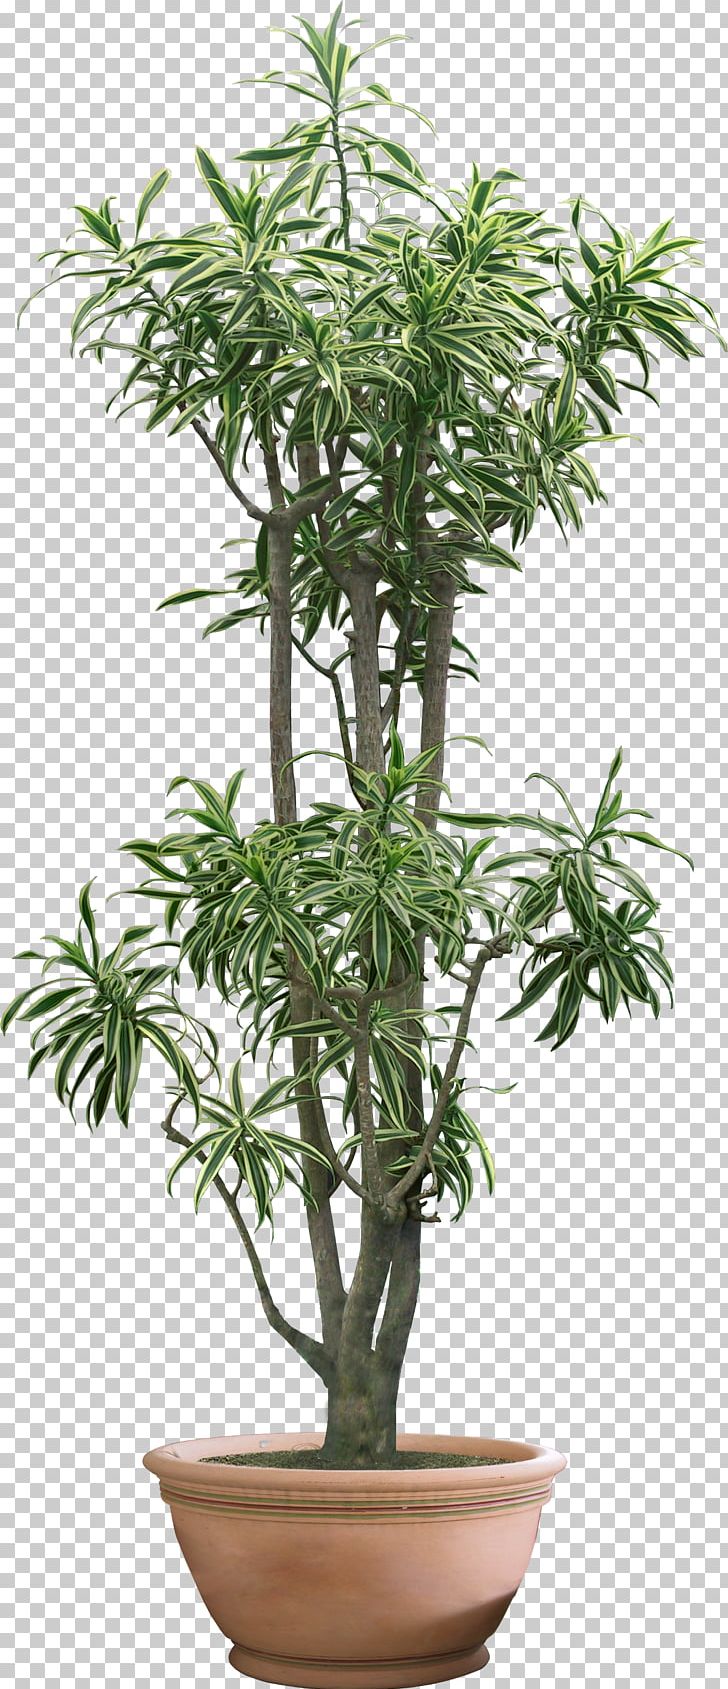 Tree Bamboo Houseplant Penjing Bonsai PNG, Clipart, Bamboo, Bonsai, Cicek Resimleri, Dracaena, Dracaena Reflexa Free PNG Download